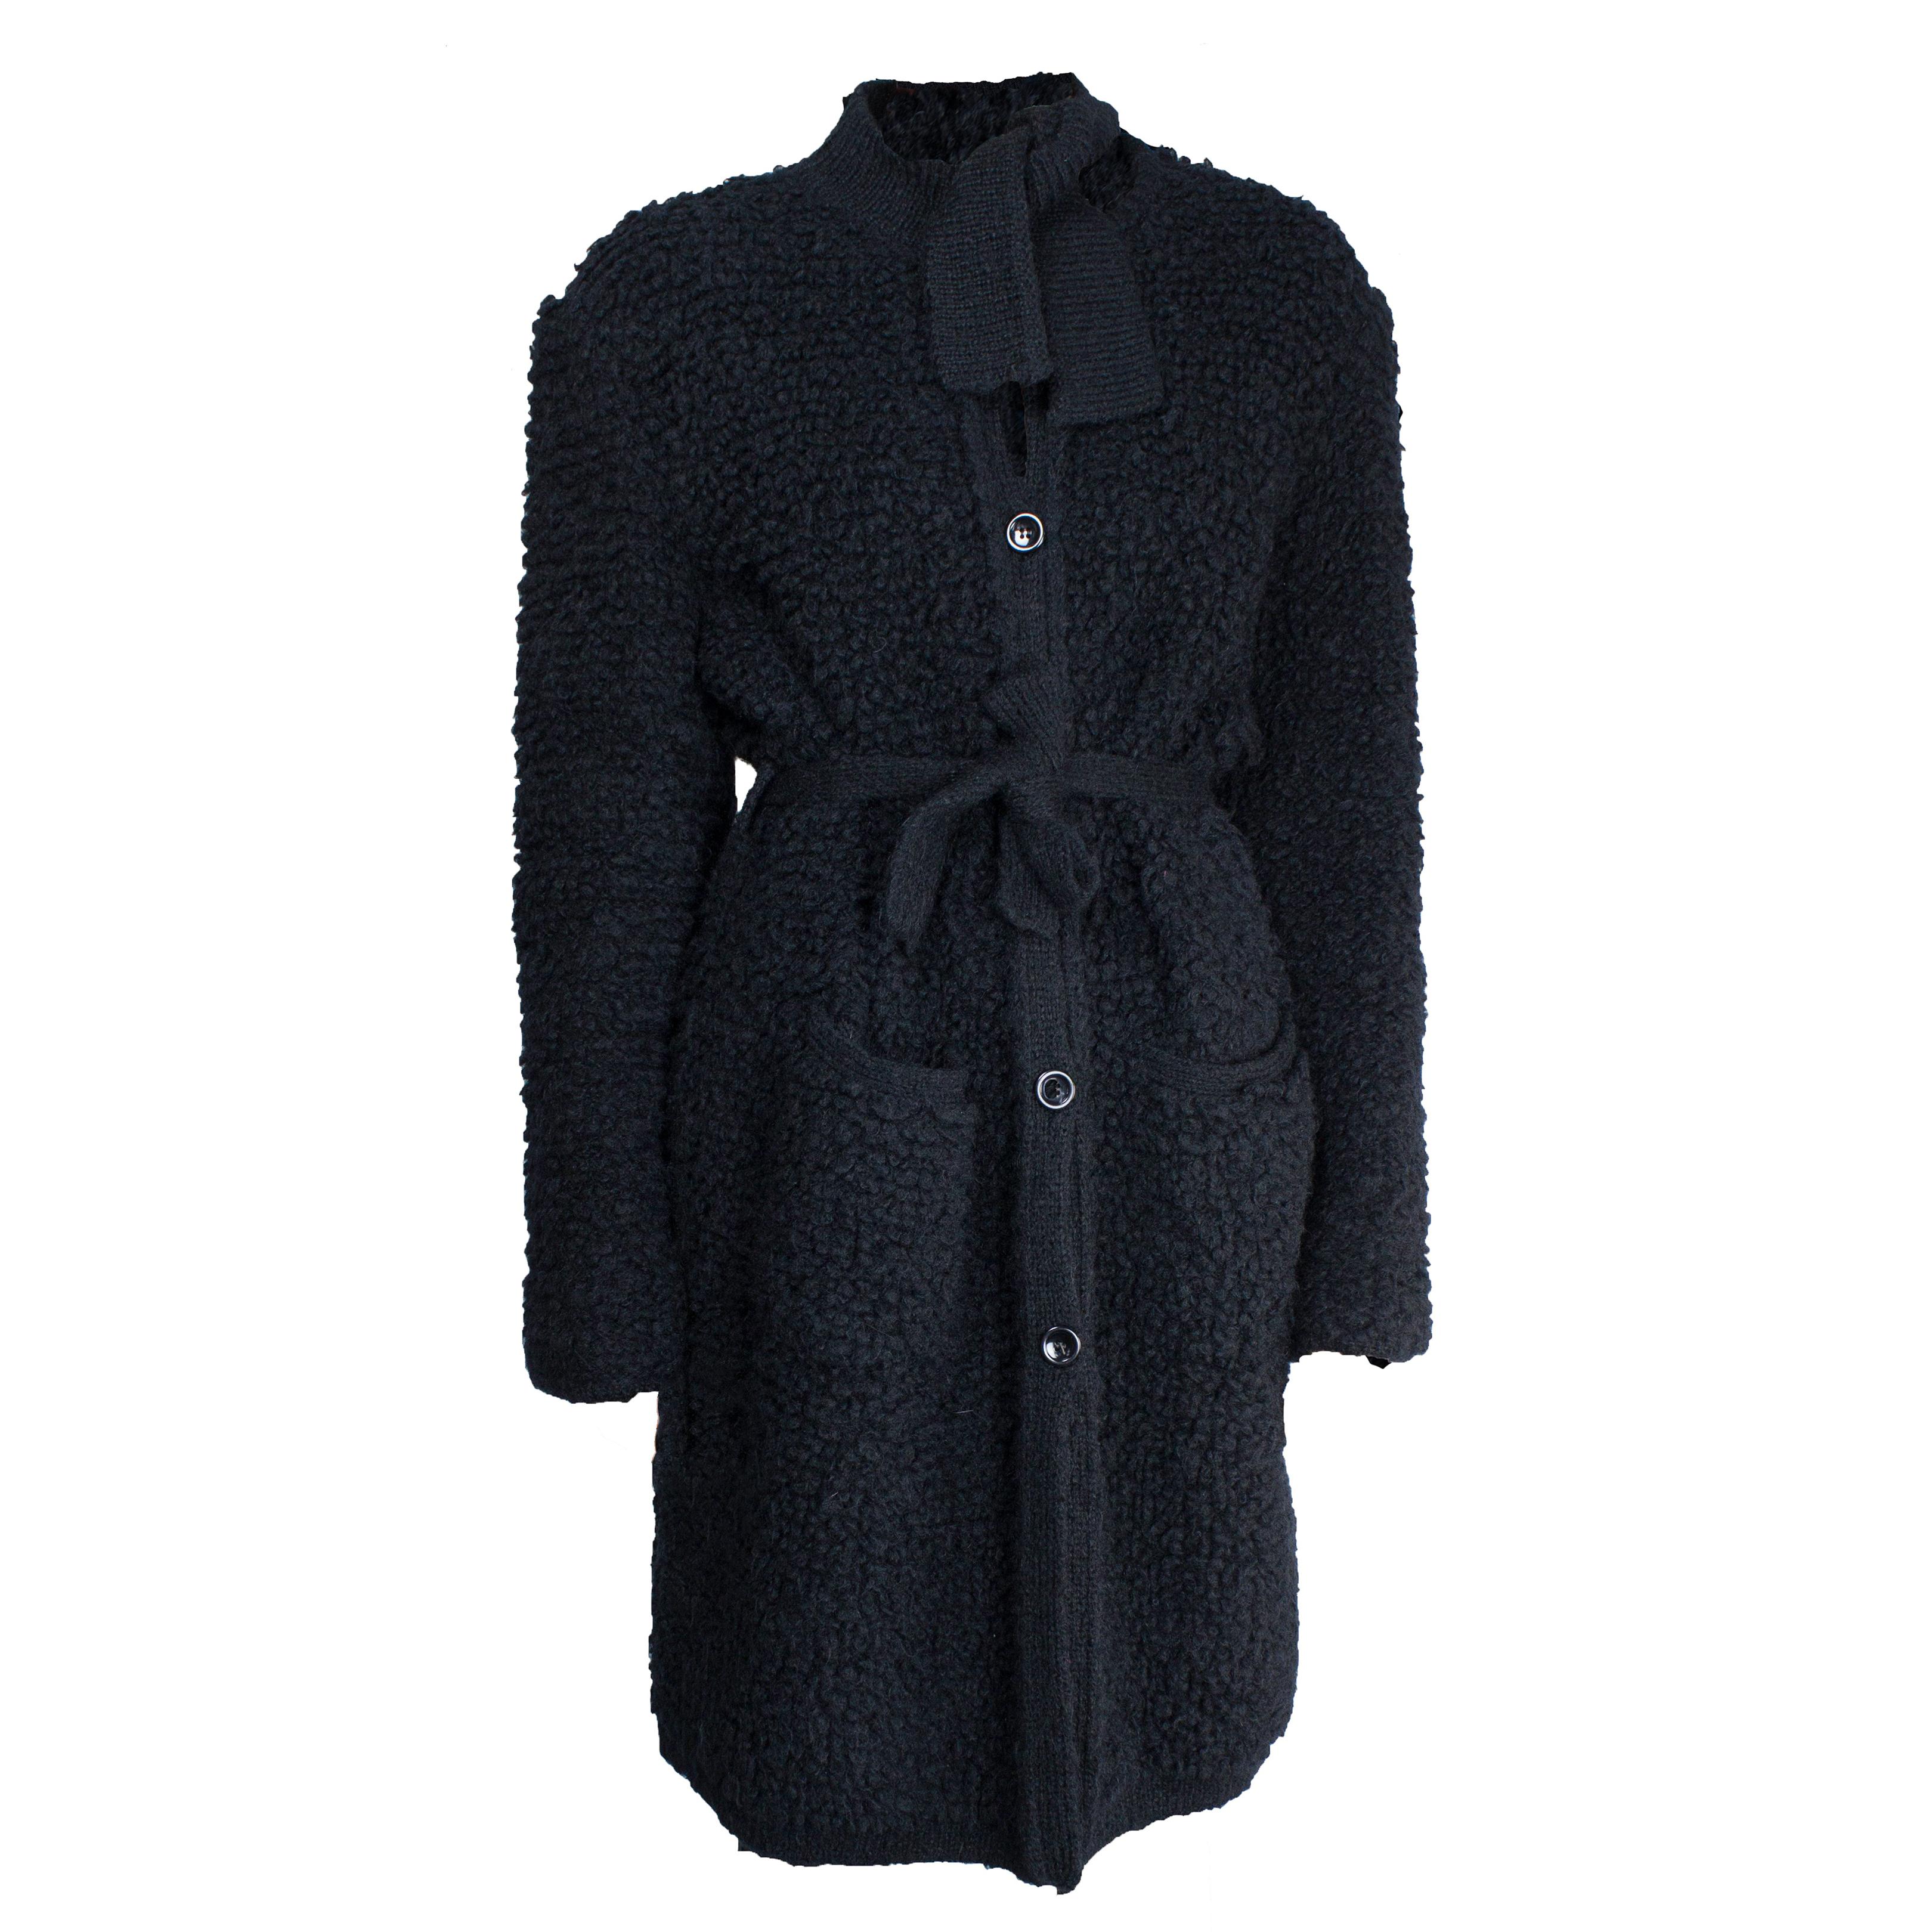 Sonia Rykiel Early knitted black wool coat, circa 1960s